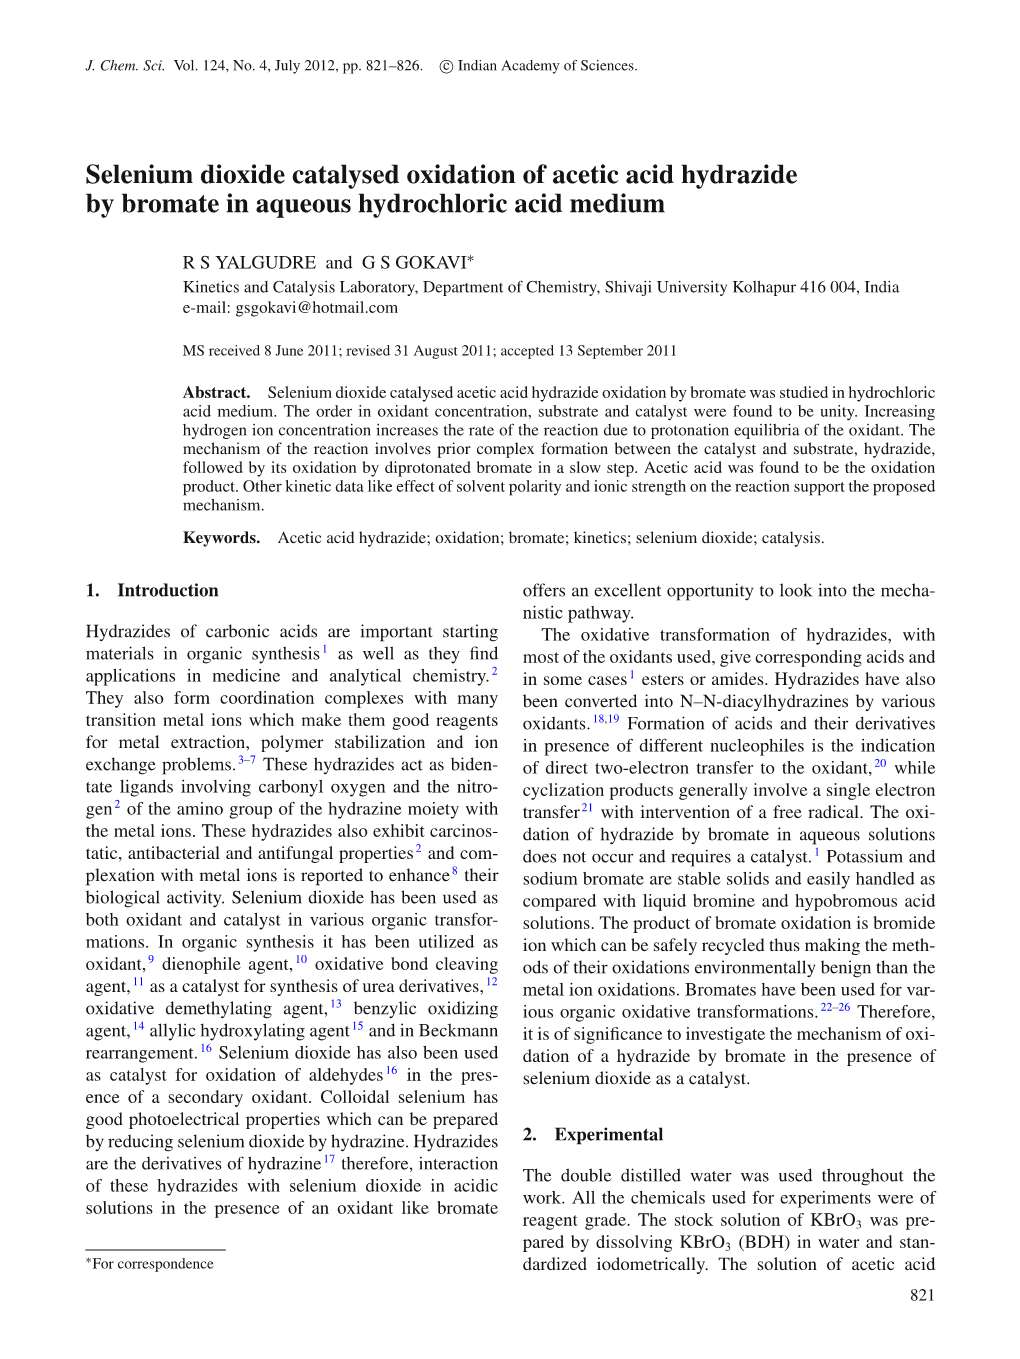 Selenium Dioxide Catalysed Oxidation of Acetic Acid Hydrazide by Bromate in Aqueous Hydrochloric Acid Medium